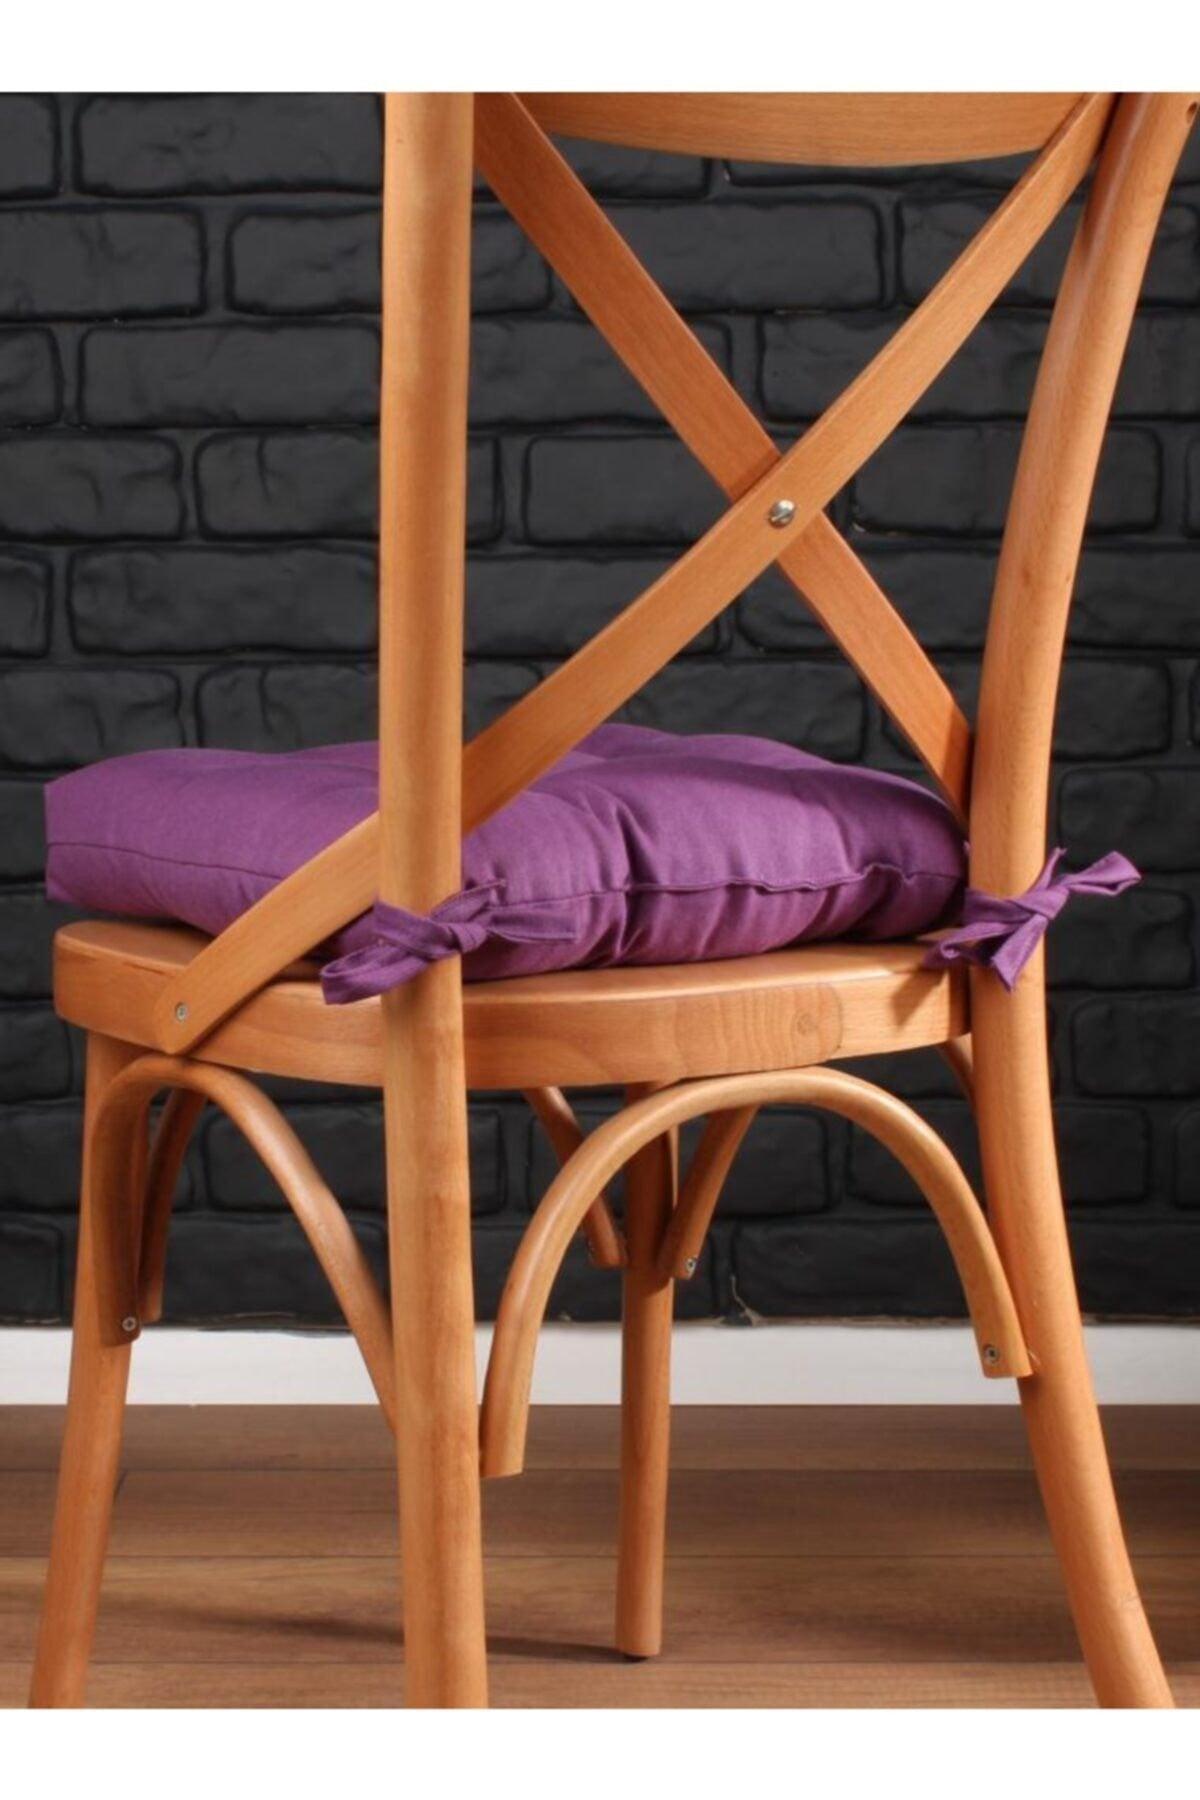 4 Pcs Luxury Pofidik Purple Chair Cushion Special Stitched Laced 40x40cm - Swordslife